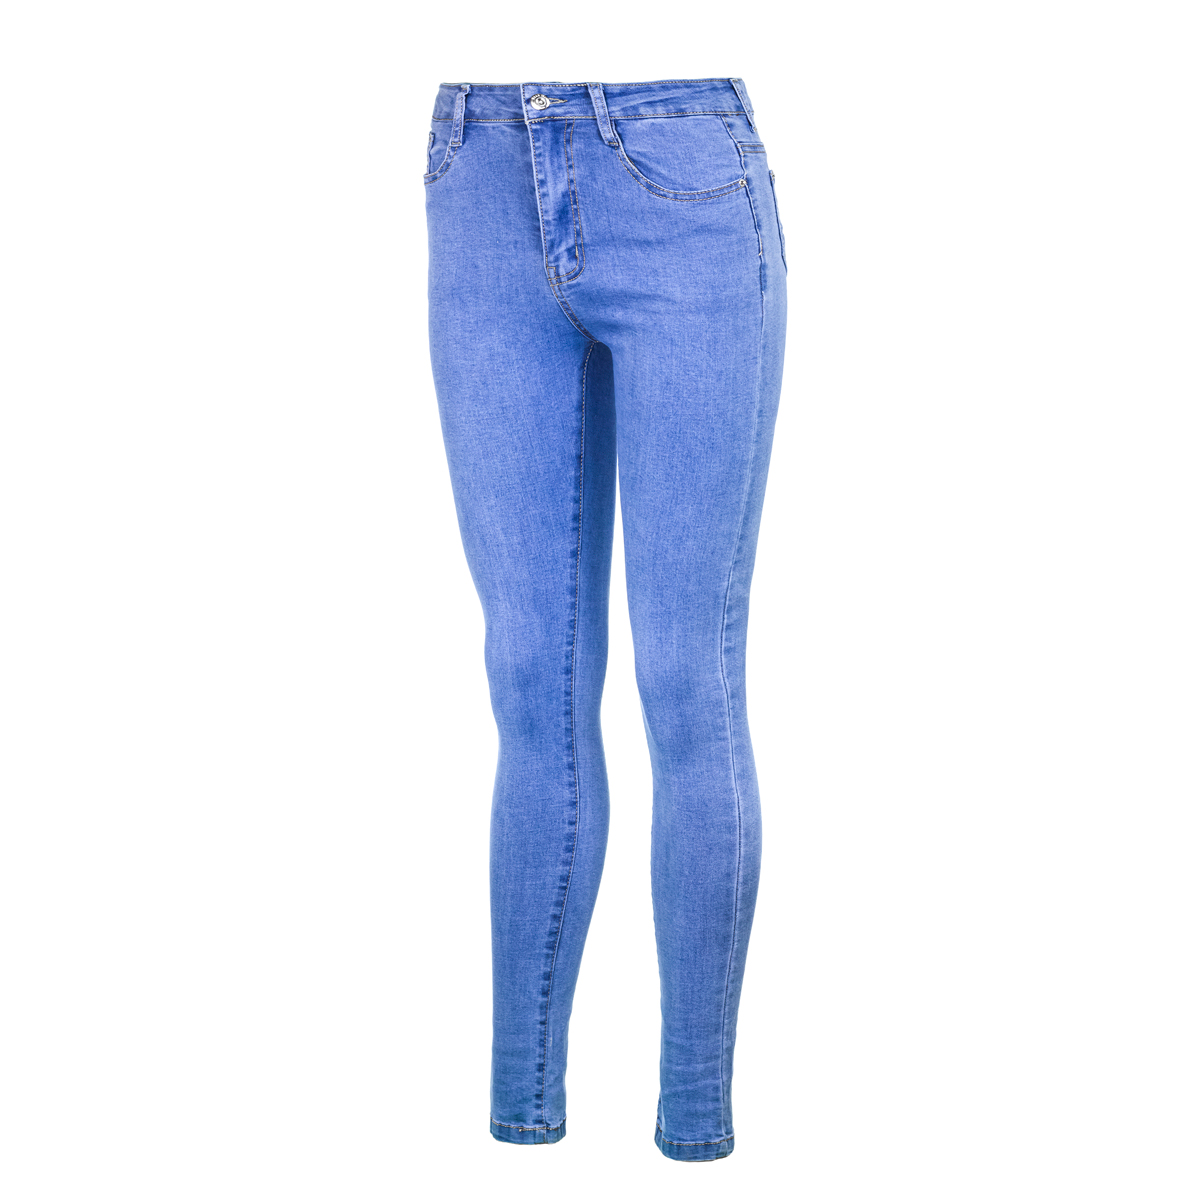 Жен. джинсы арт. 12-0155 Голубой р. 30 Китай, размер 30 - фото 2